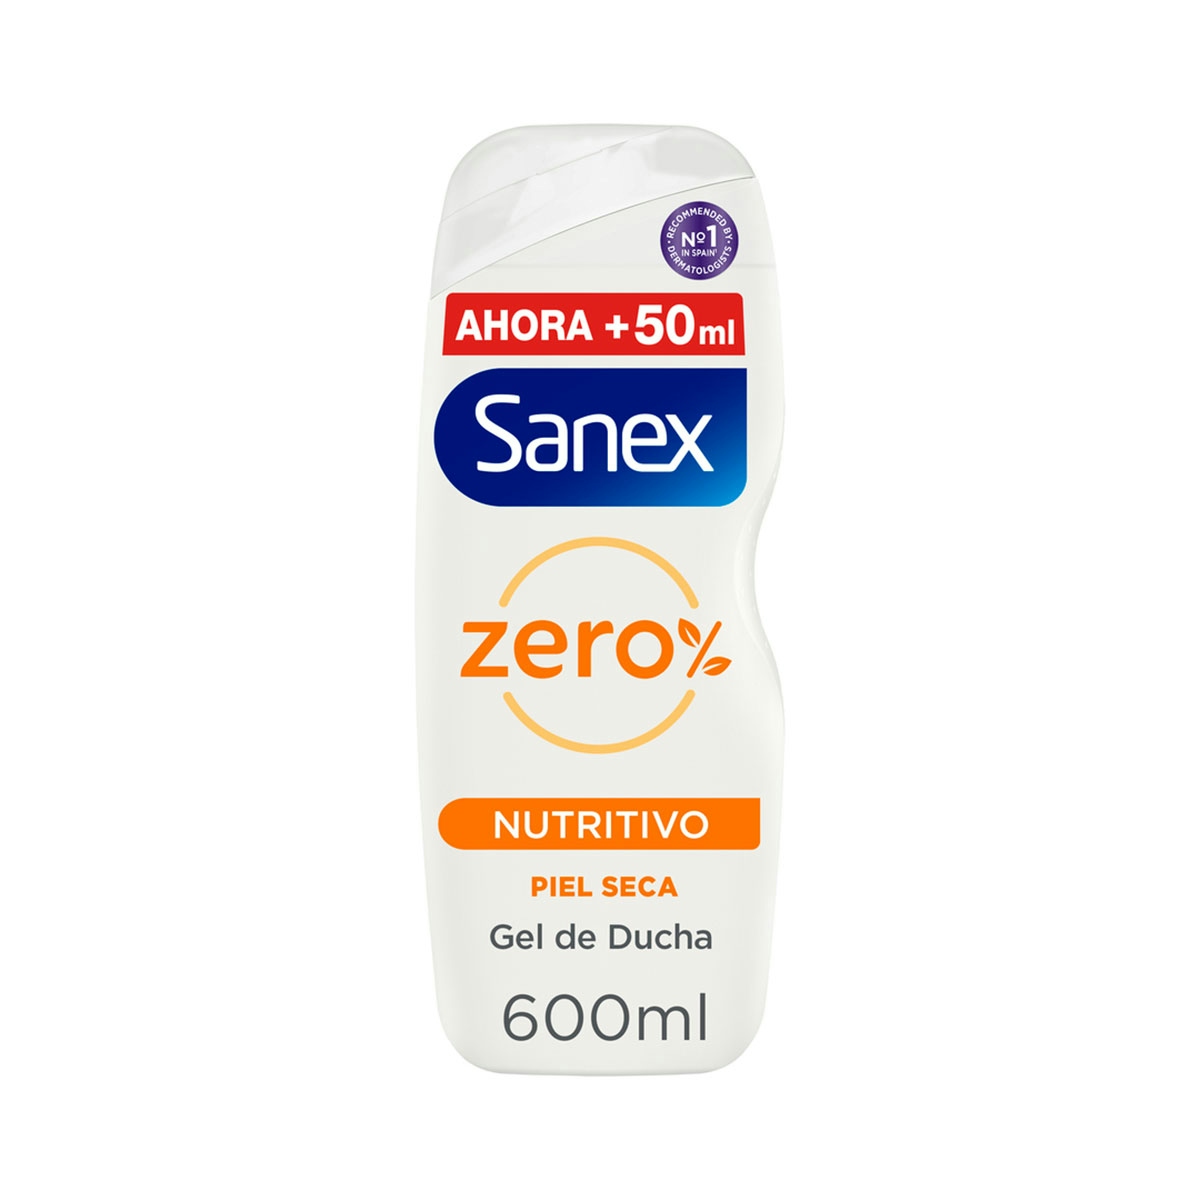 Gel Sanex zero% piel seca 600ml